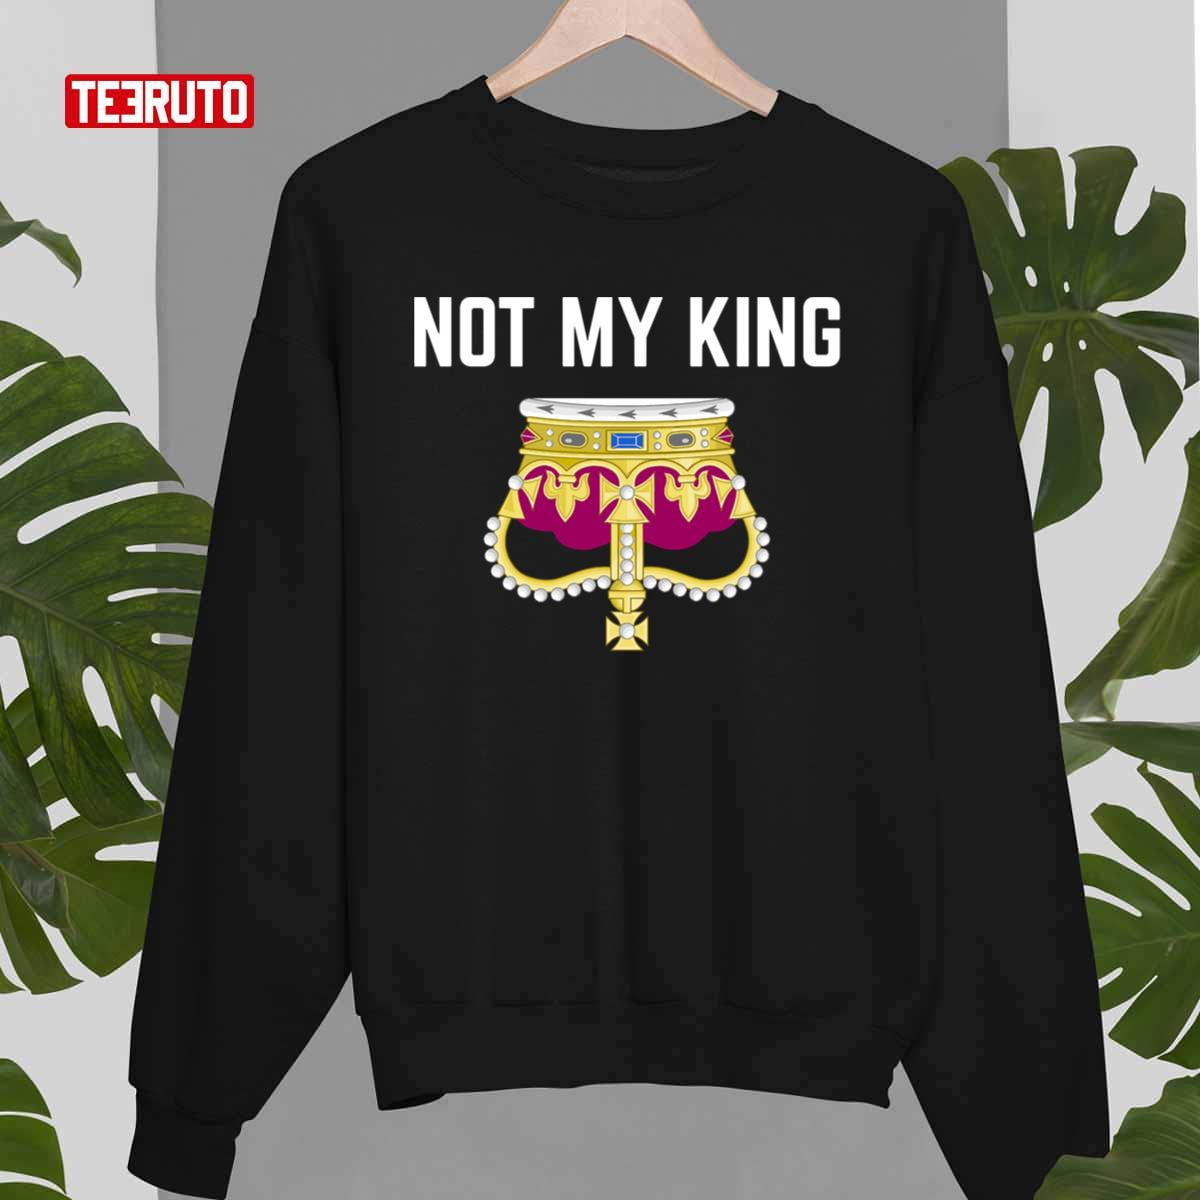 Not My King Charles III Upside Down Crown Unisex T-shirt